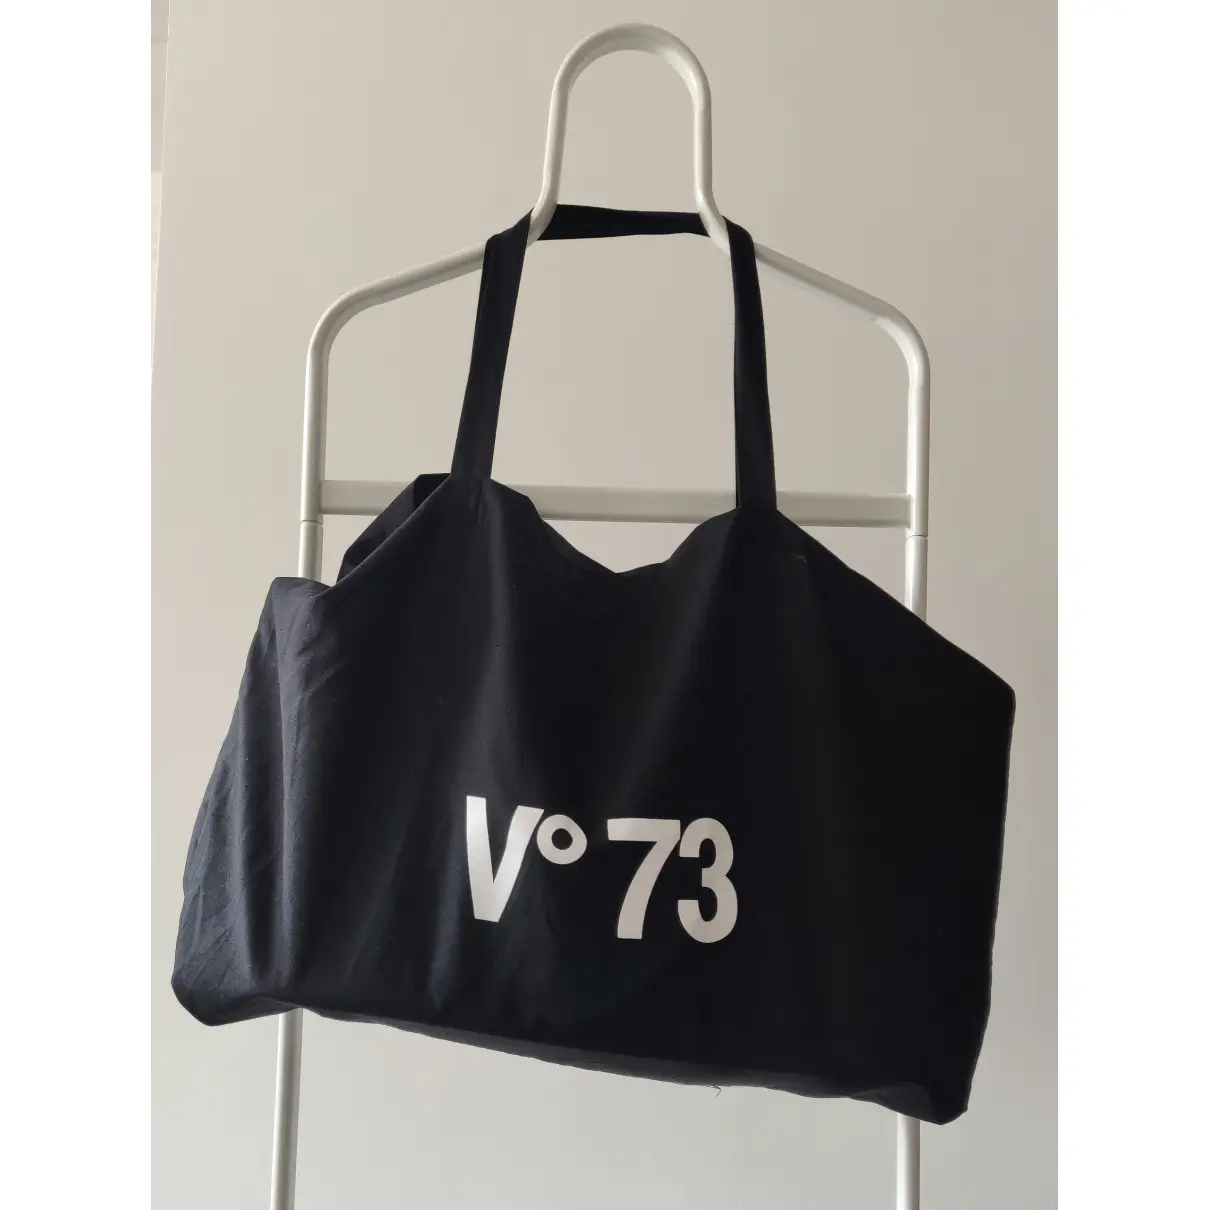 Buy V 73 Leather handbag online